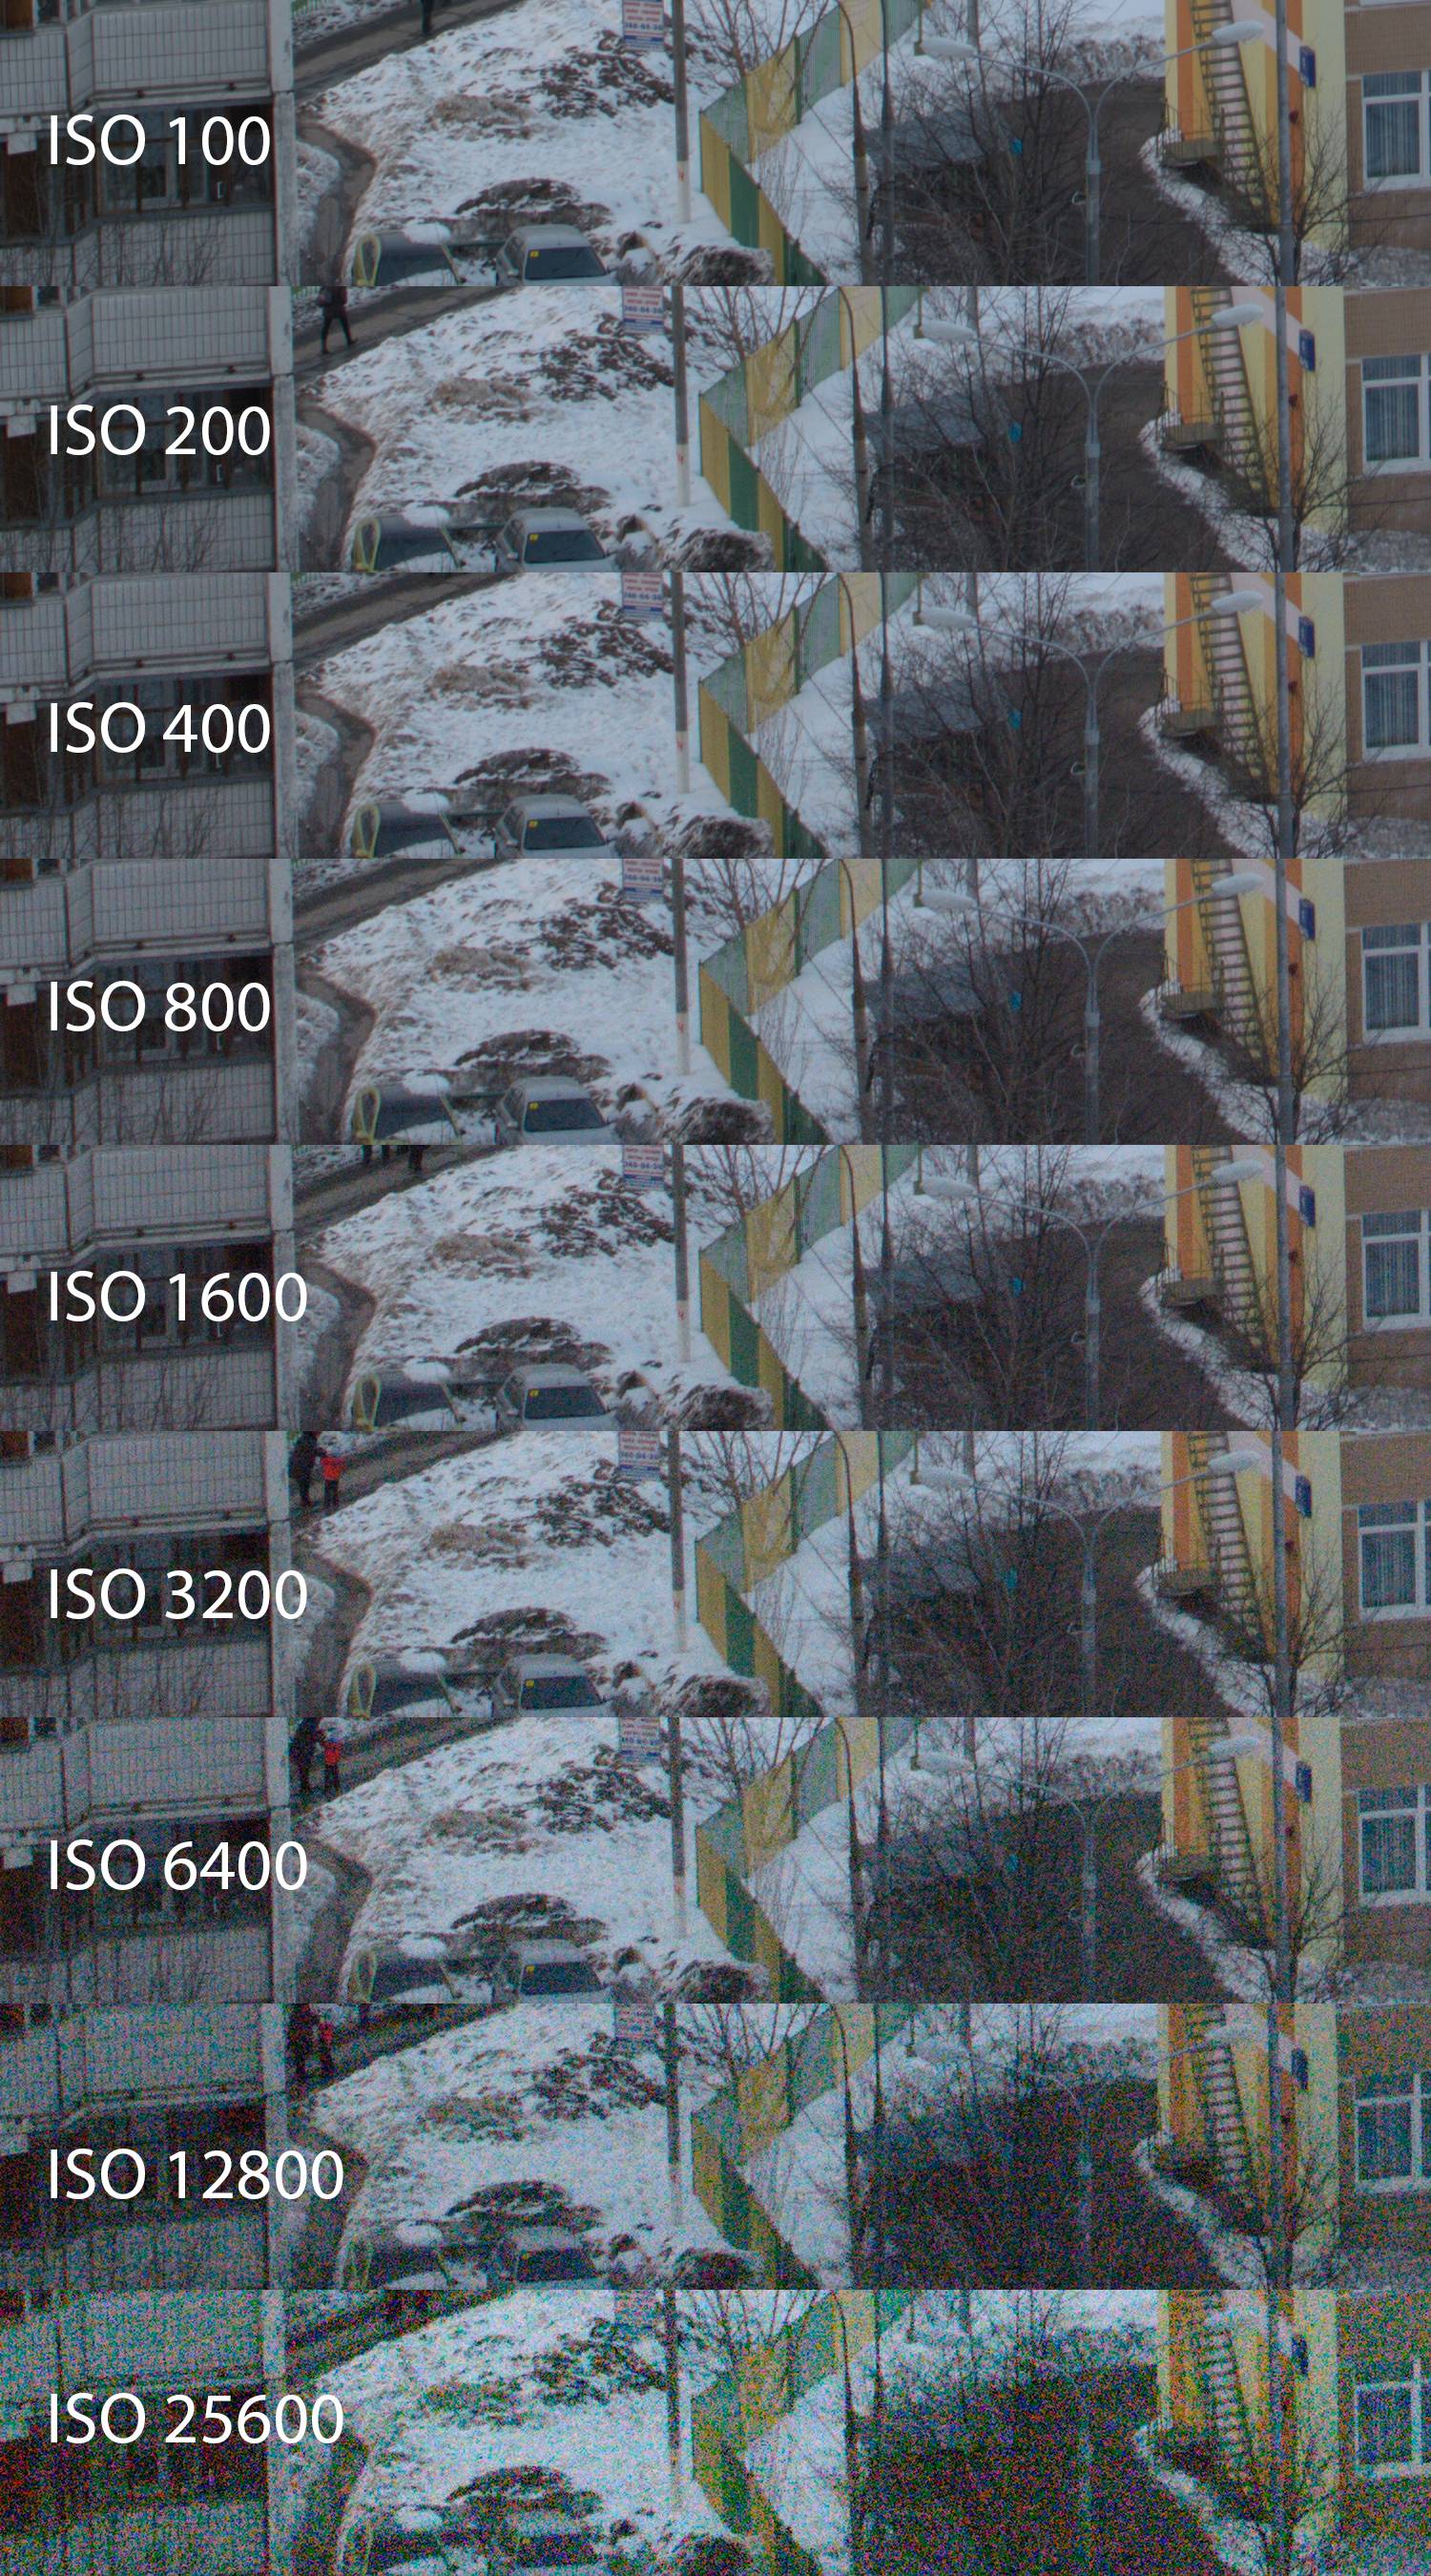 2- NIKON D5200-ISO 400-28.0 